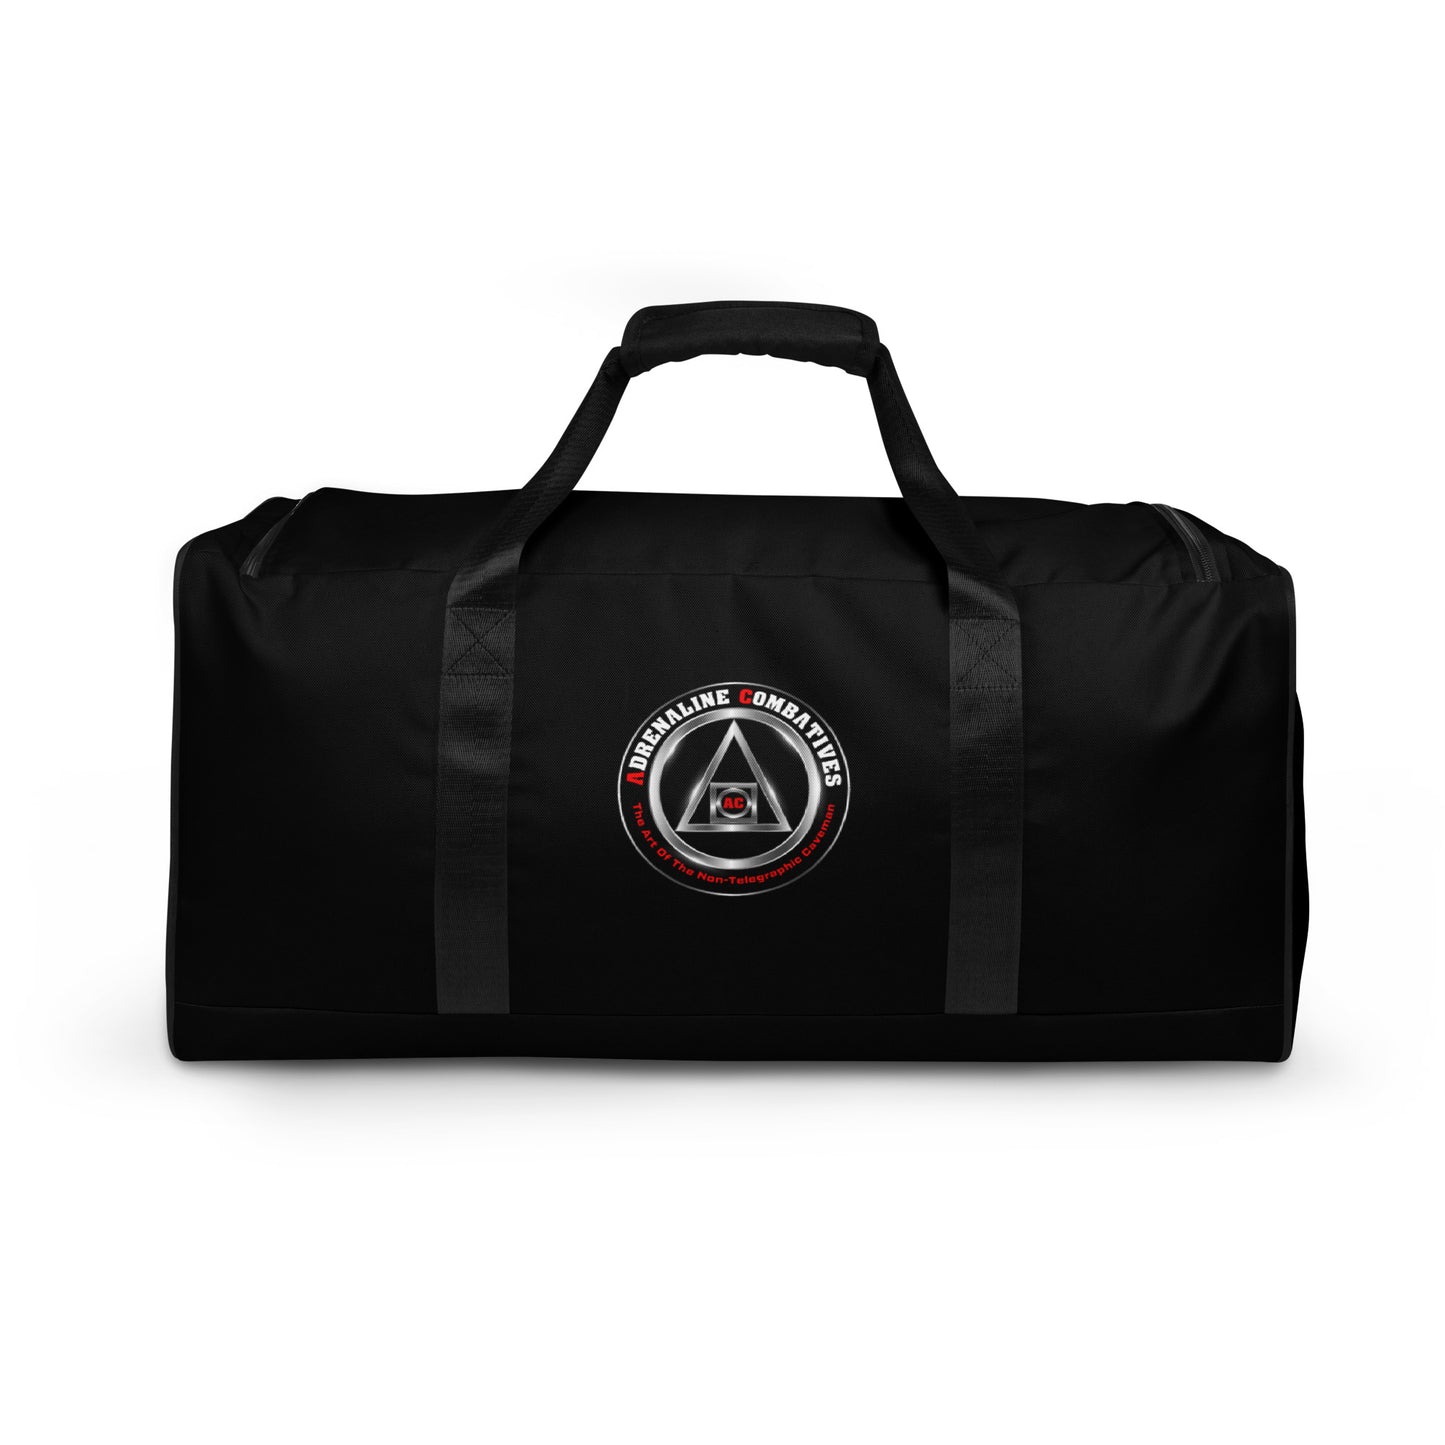 Duffle bag - Adrenaline Combatives - Logo